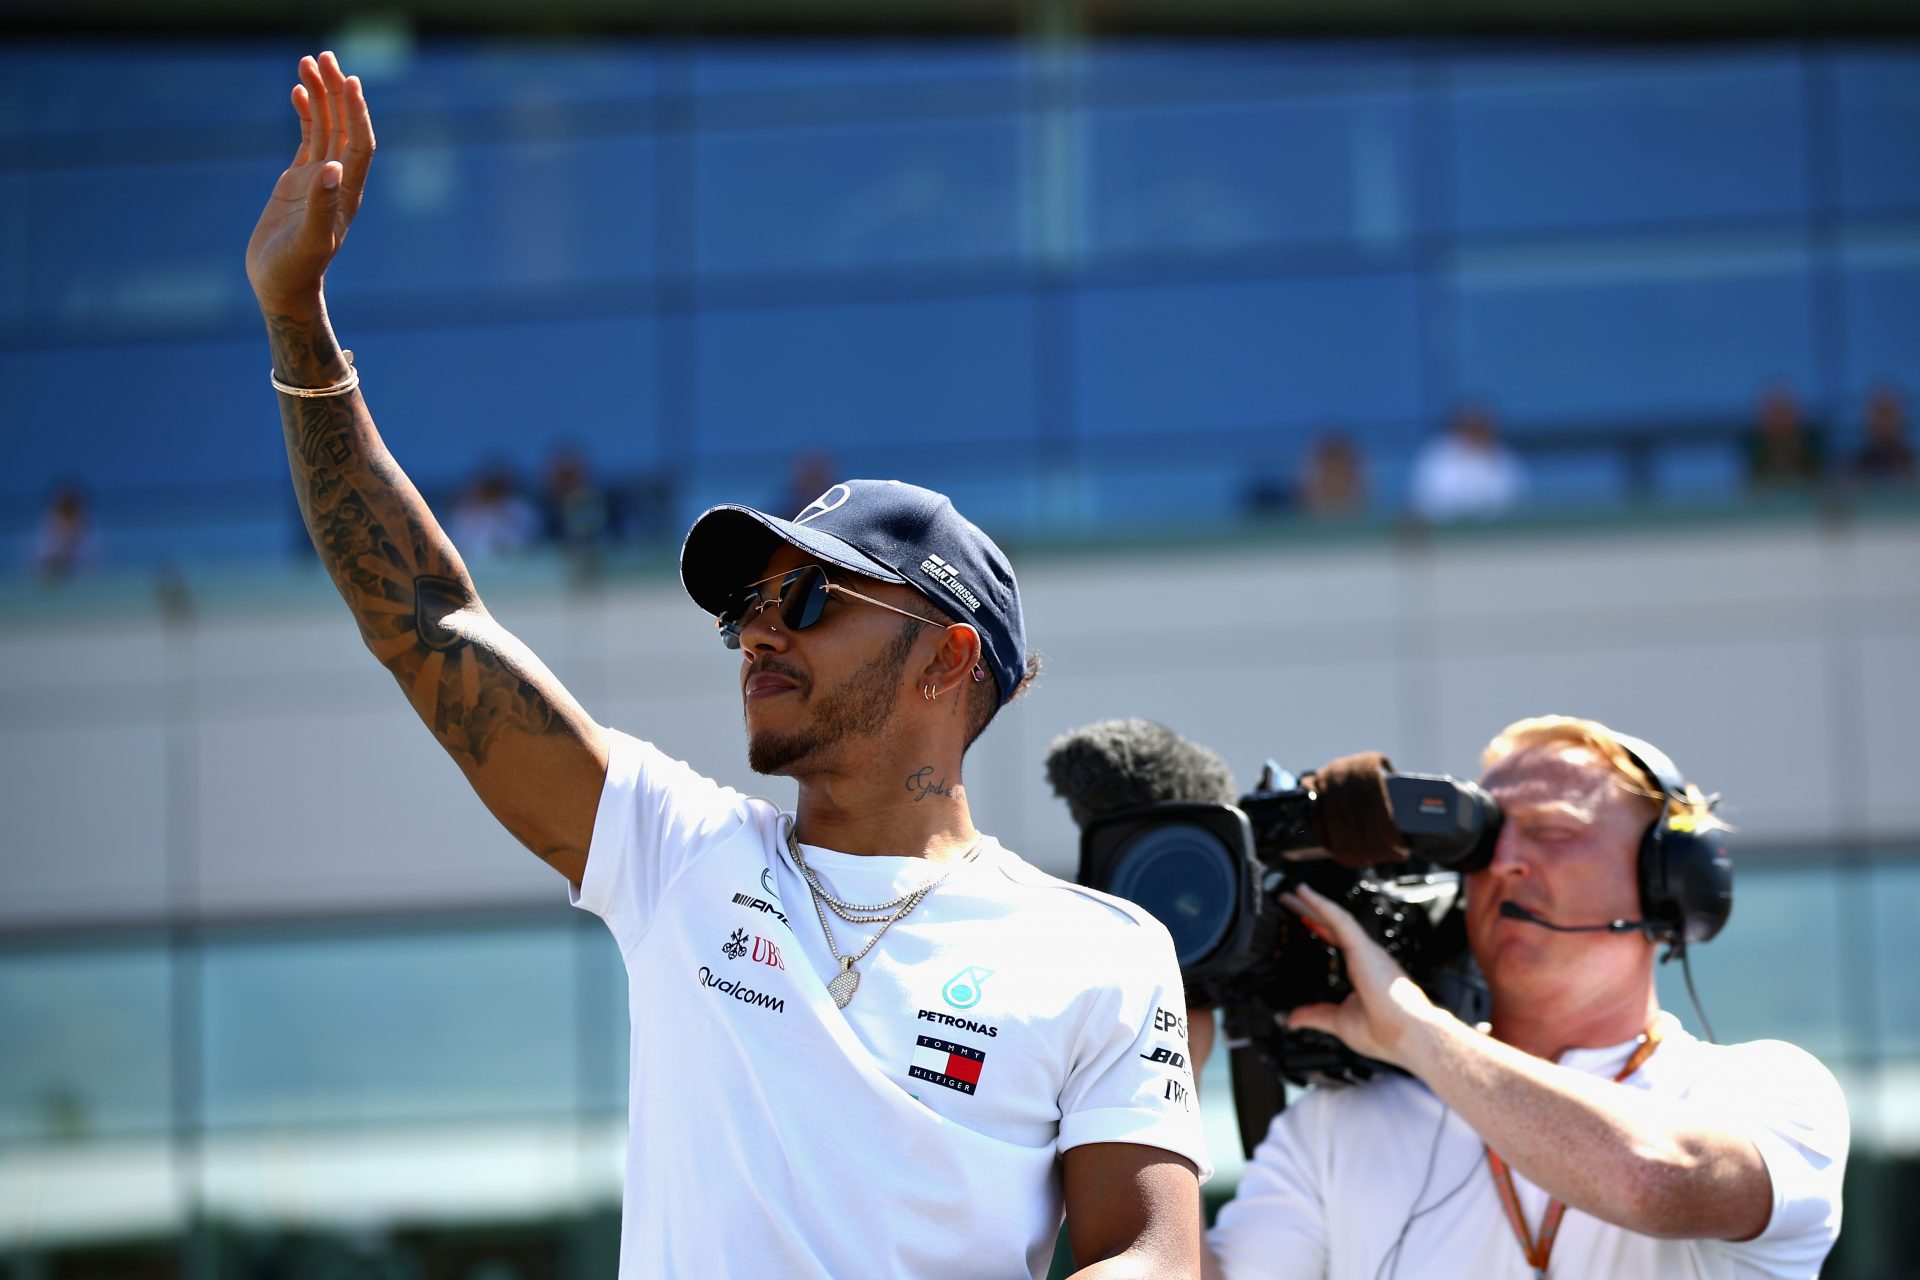 Lewis Hamilton (Mercedes) : 55 Millionen US-Dollar